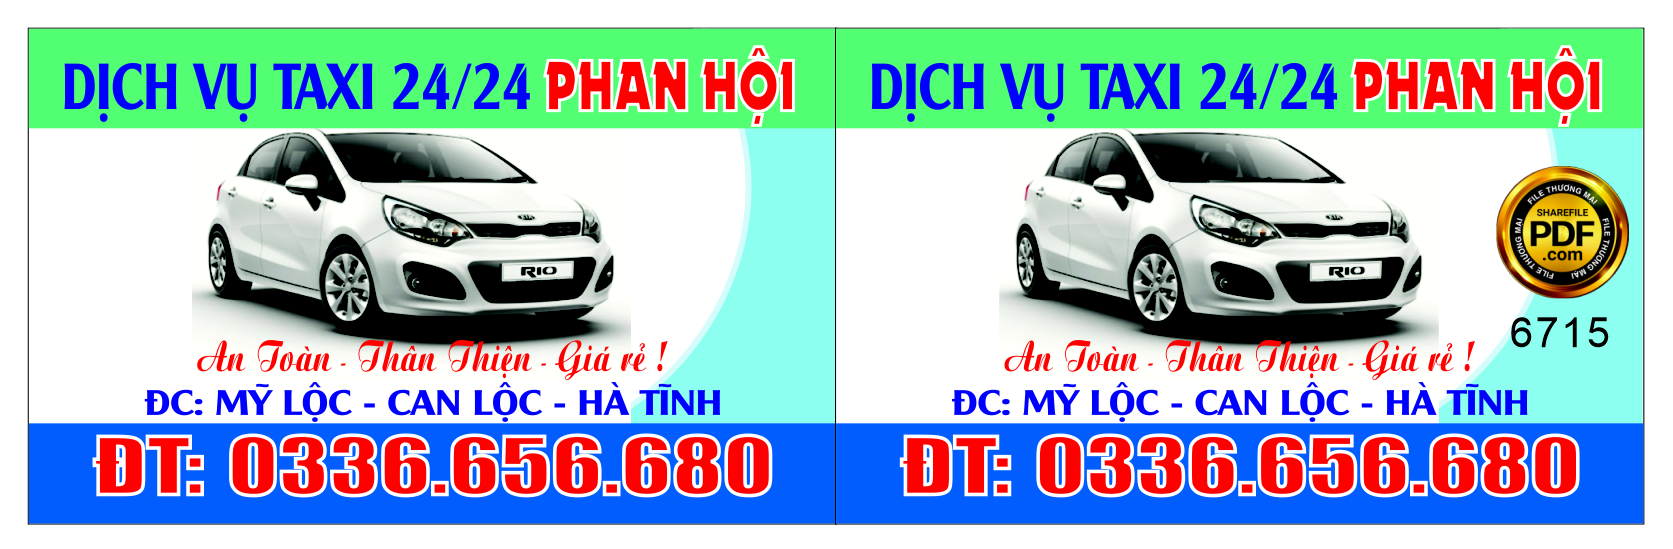 card visit dich vu taxi 24-24 phan hoi.png